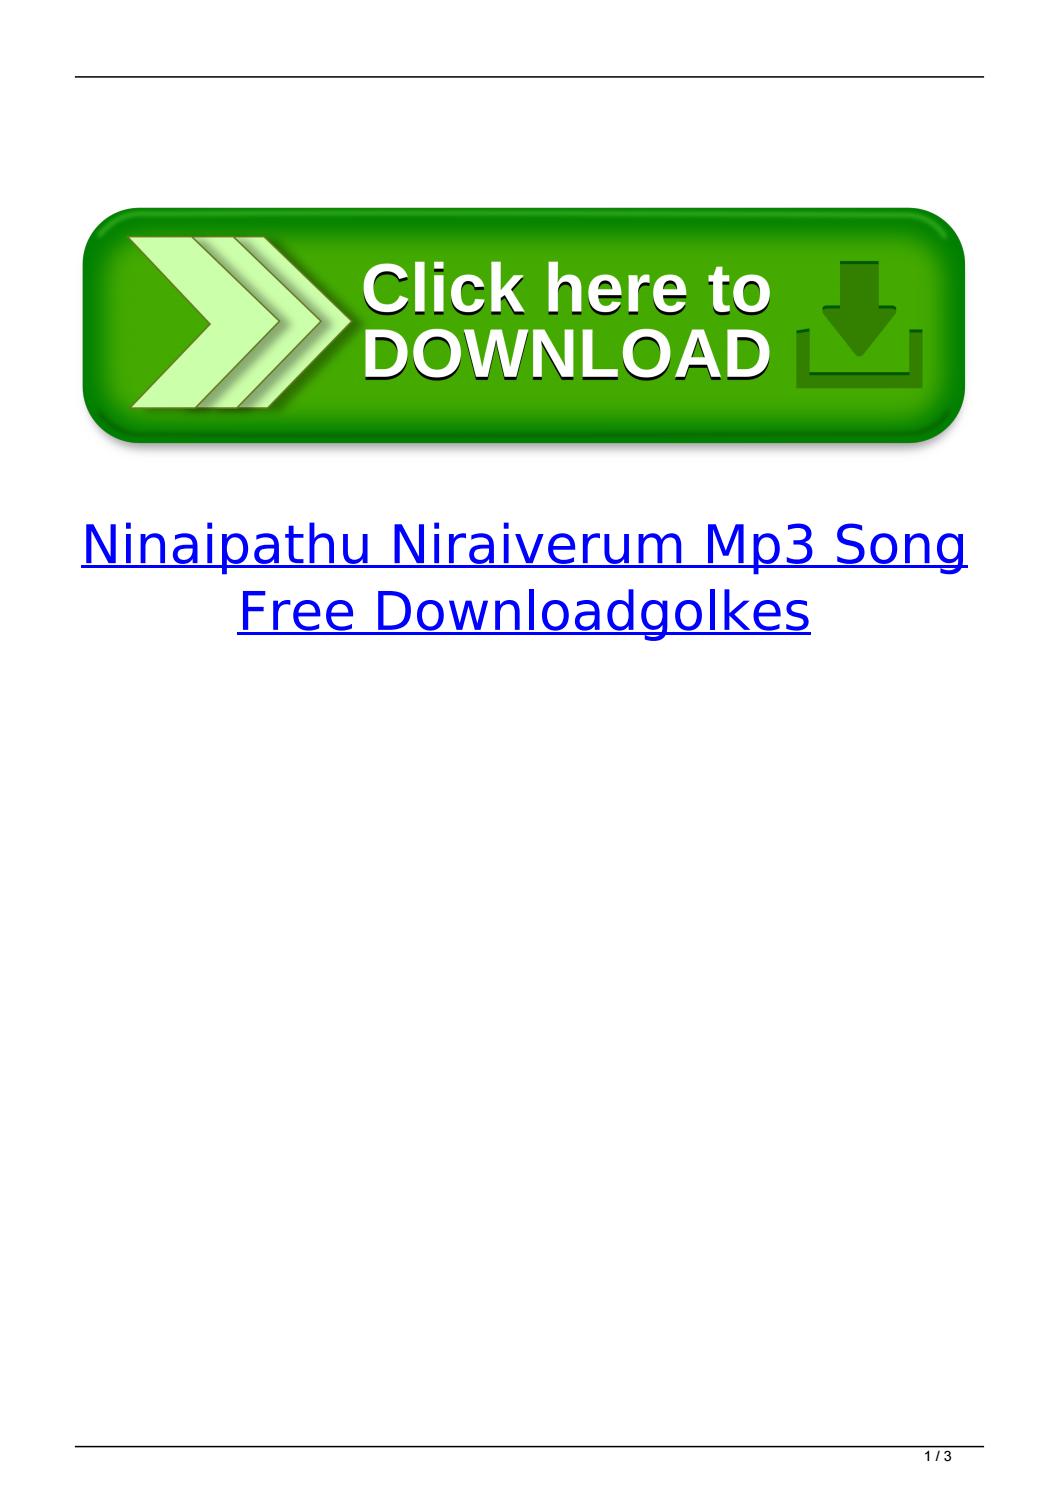 ninaipathu niraiverum mp3 song